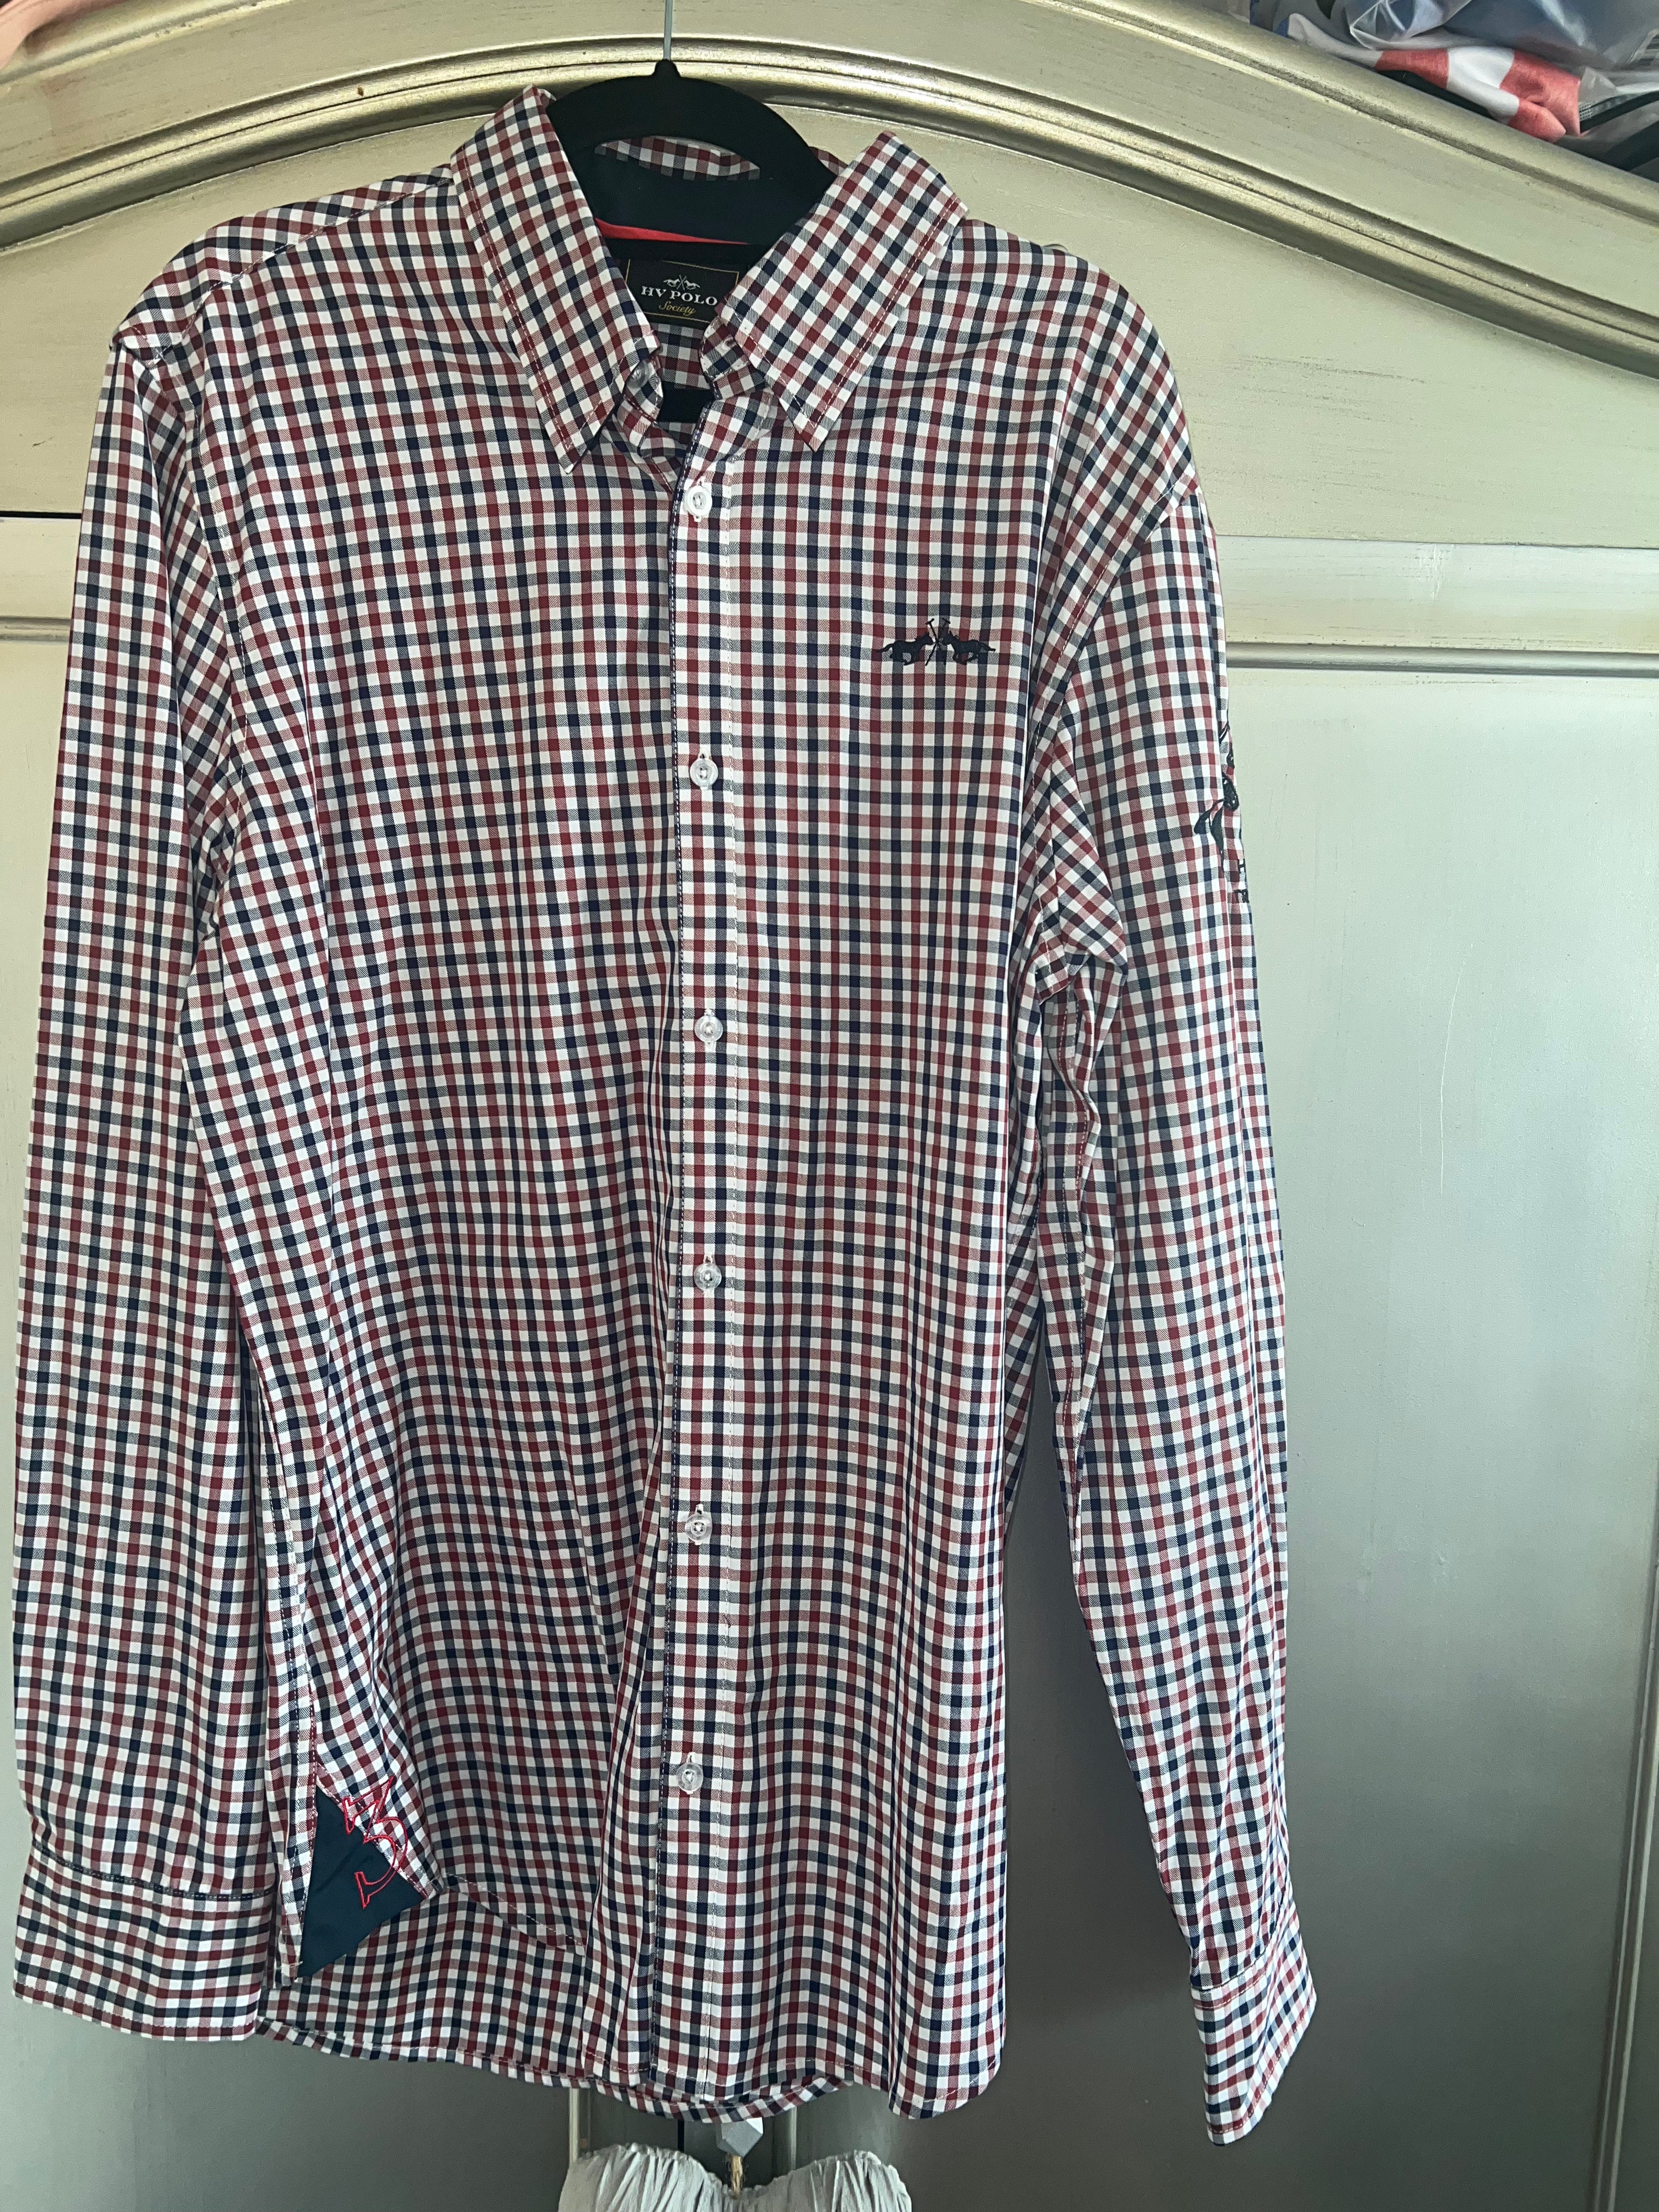 Hv Polo Burgandy Checked Men’s Large Shirt Rrp £109